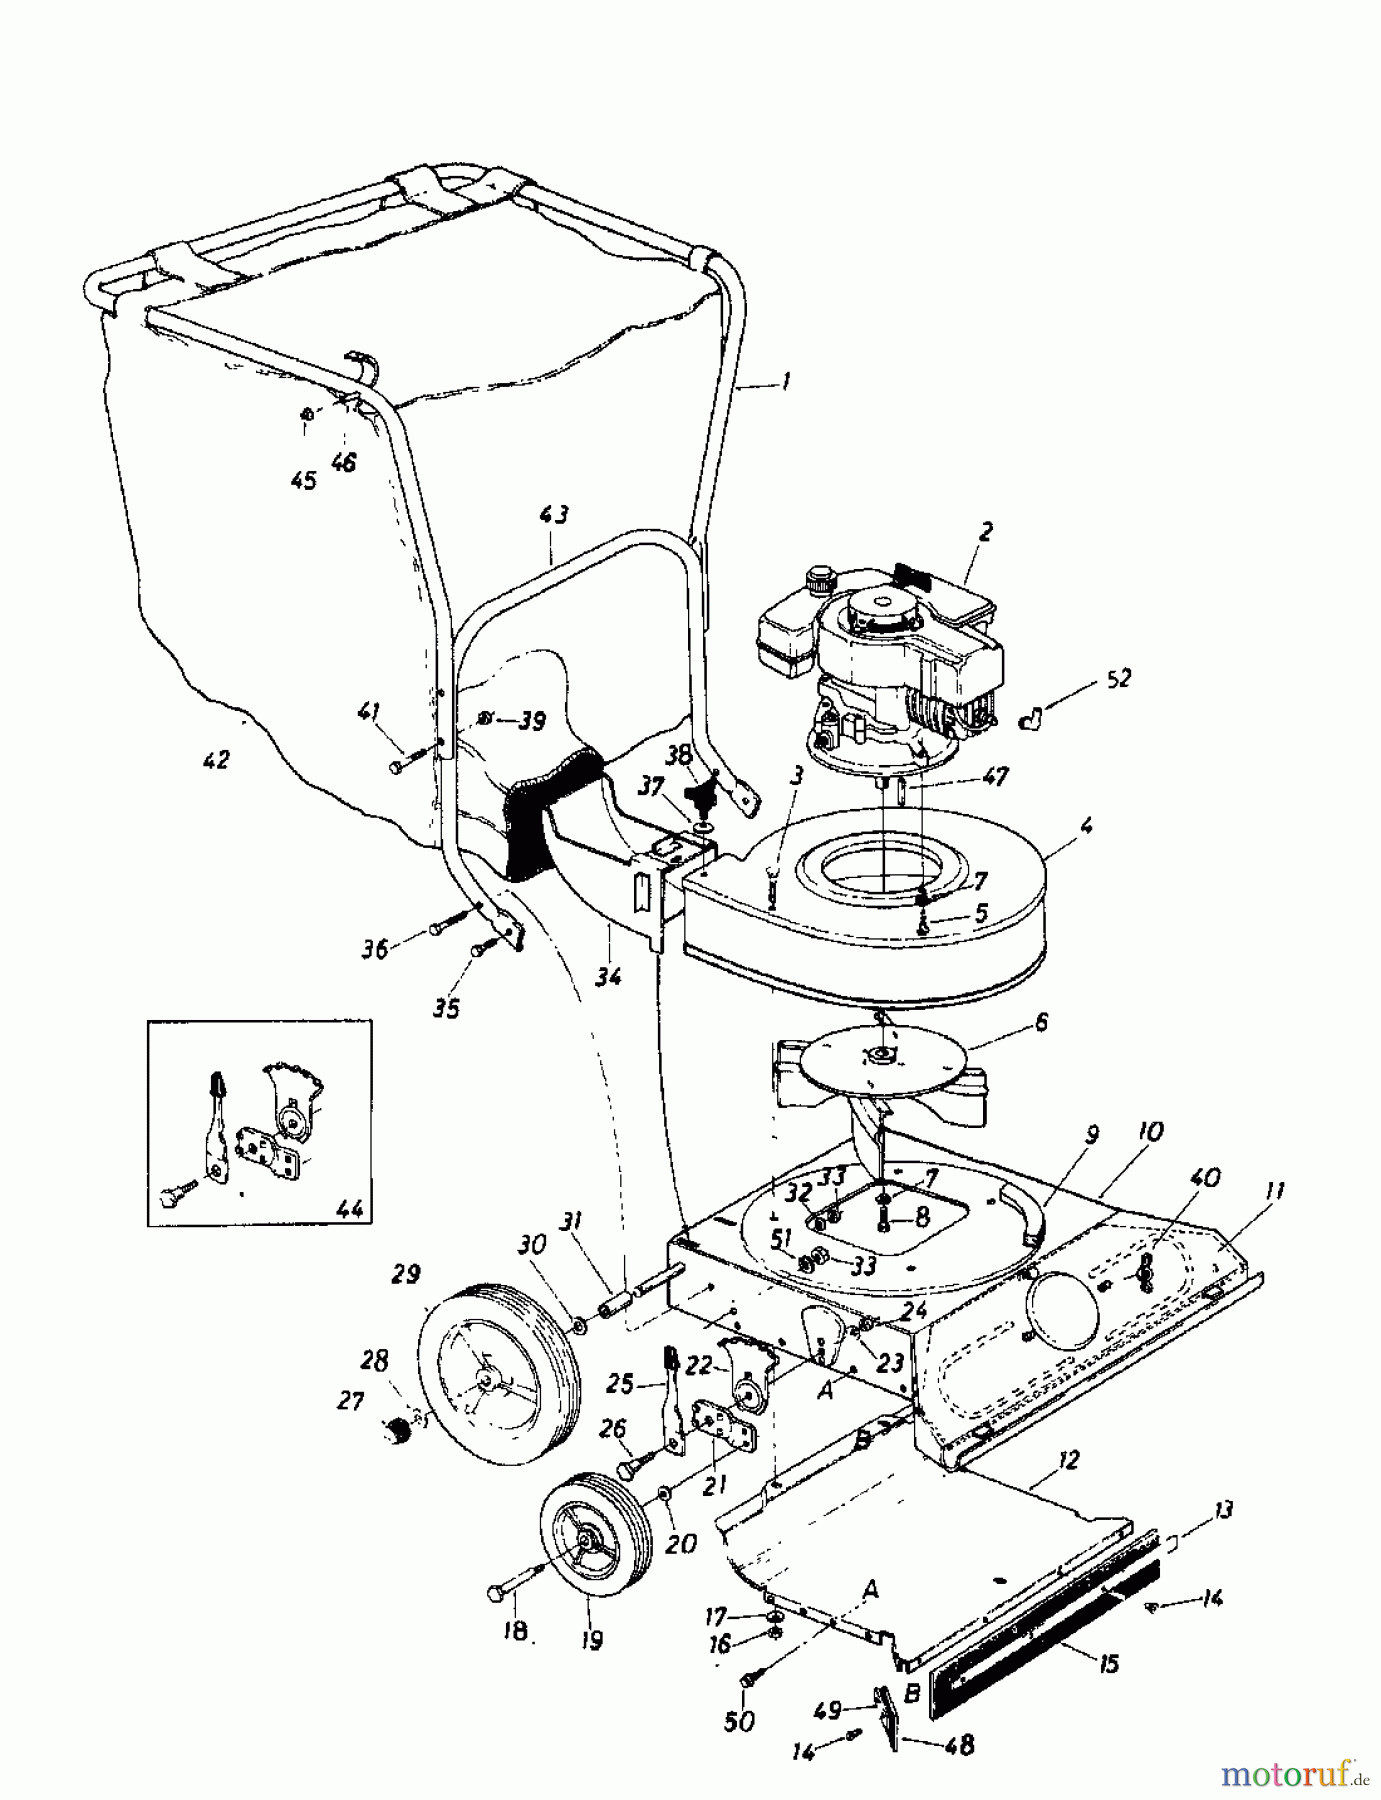  MTD Leaf blower, Blower vac Air-Vac 660 249-6600  (1989) Basic machine